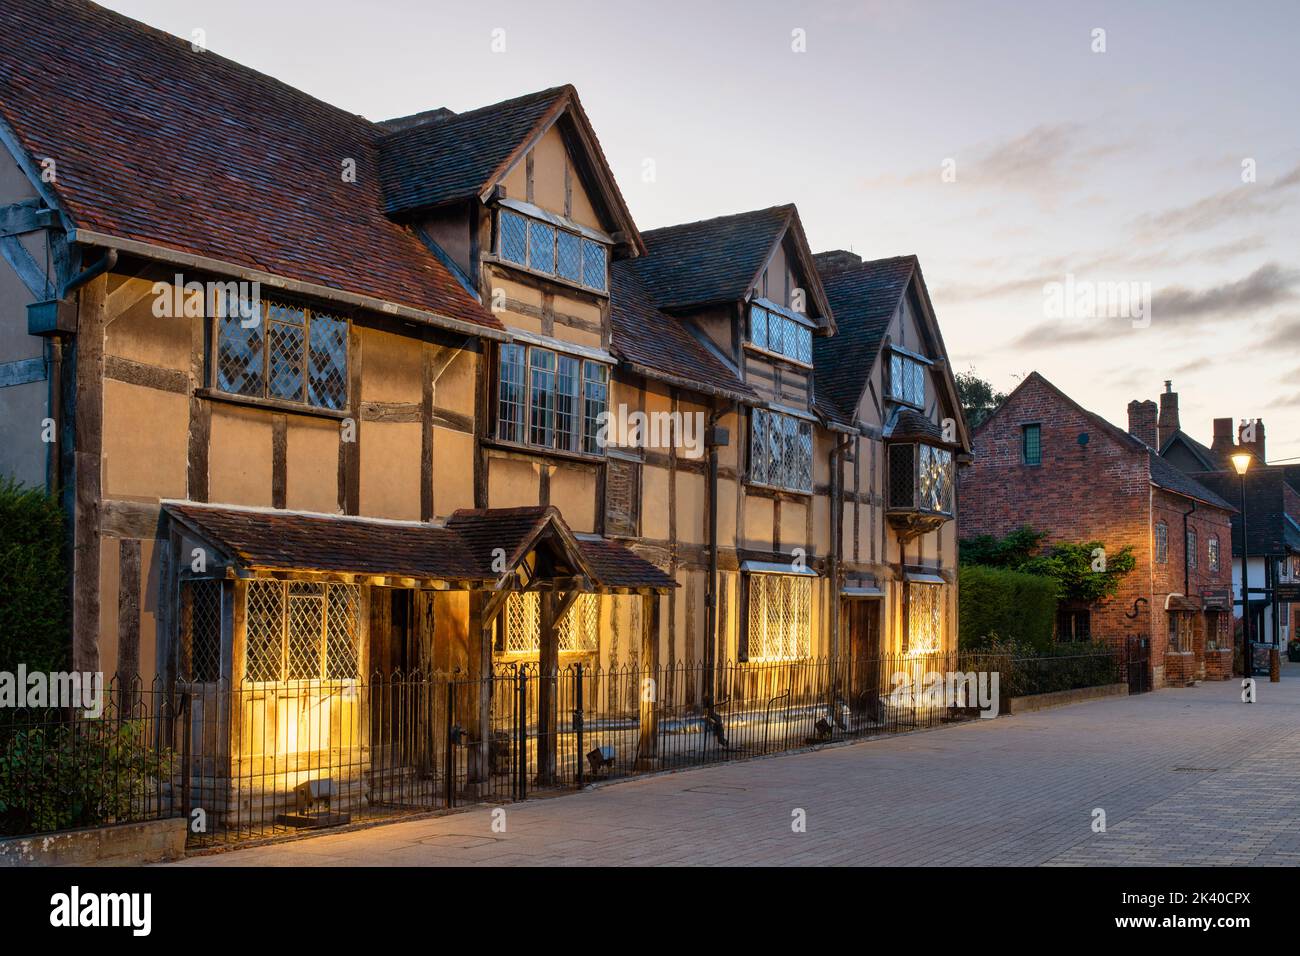 William Shakespeare birthplace at dawn. Henley street, Stratford upon Avon, Warwickshire, England Stock Photo